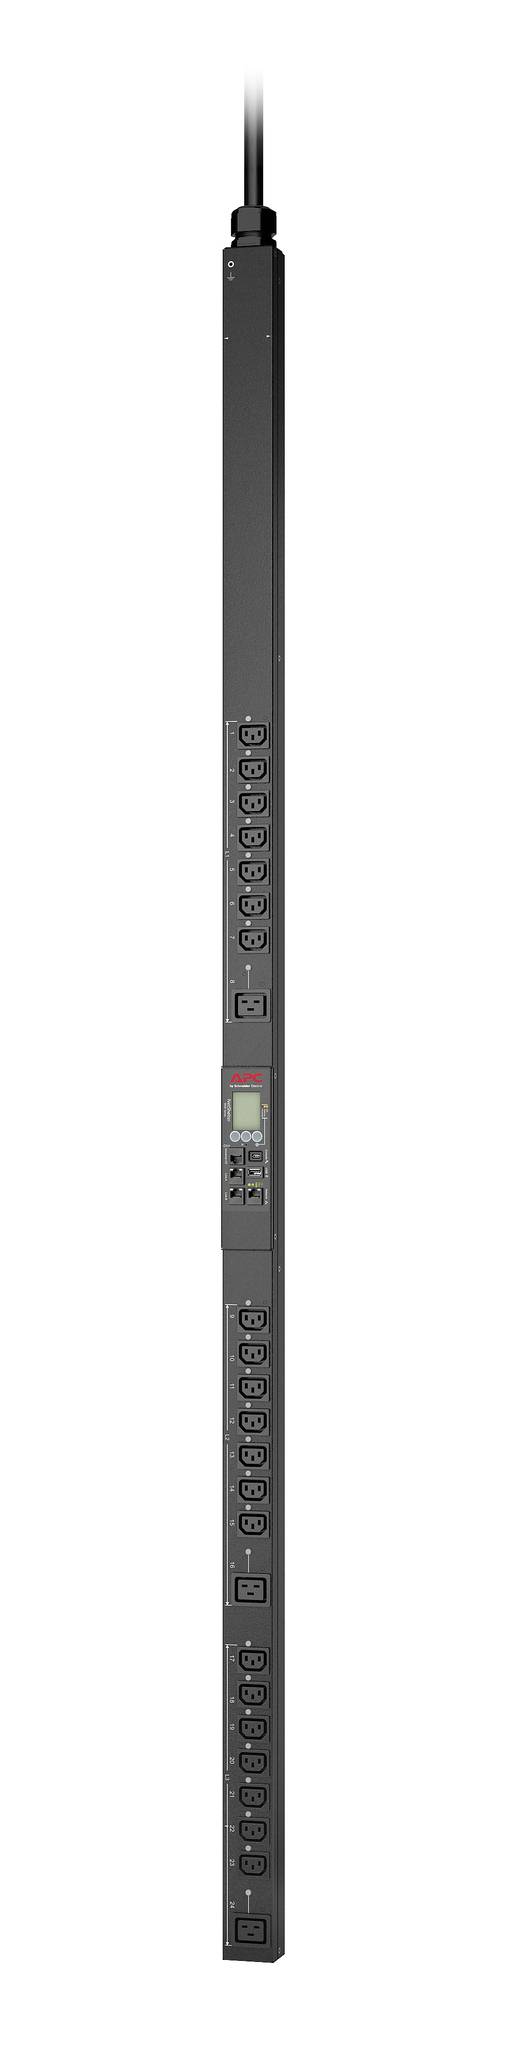 Rca Informatique - Image du produit : RACK PDU 9000 SWITCHED ZEROU 11.0KW 230V C13 C19